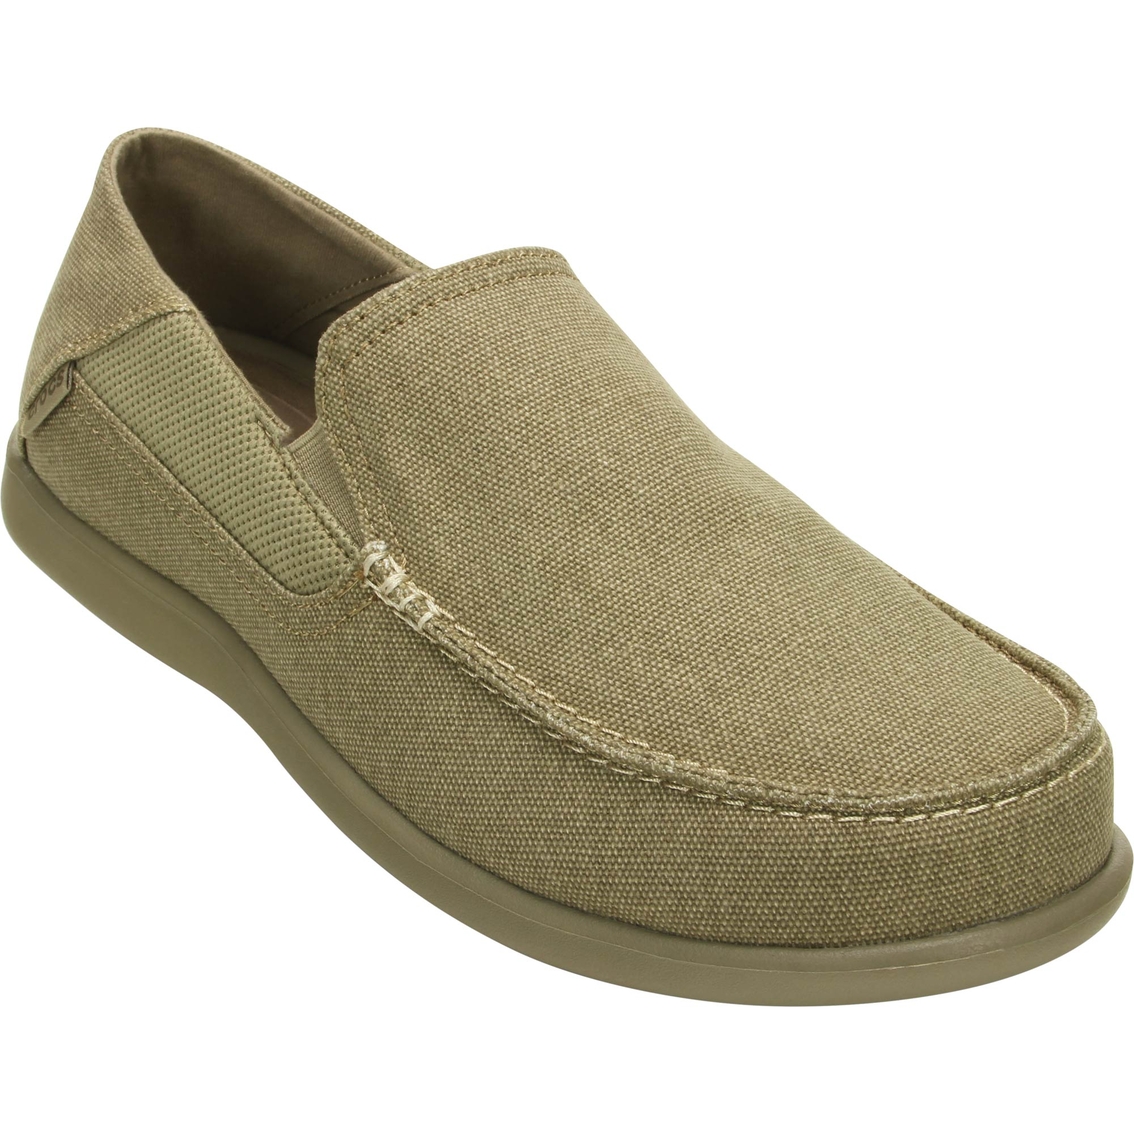 Crocs Santa Cruz Luxe Loafers | Casuals | Shoes | Shop The Exchange